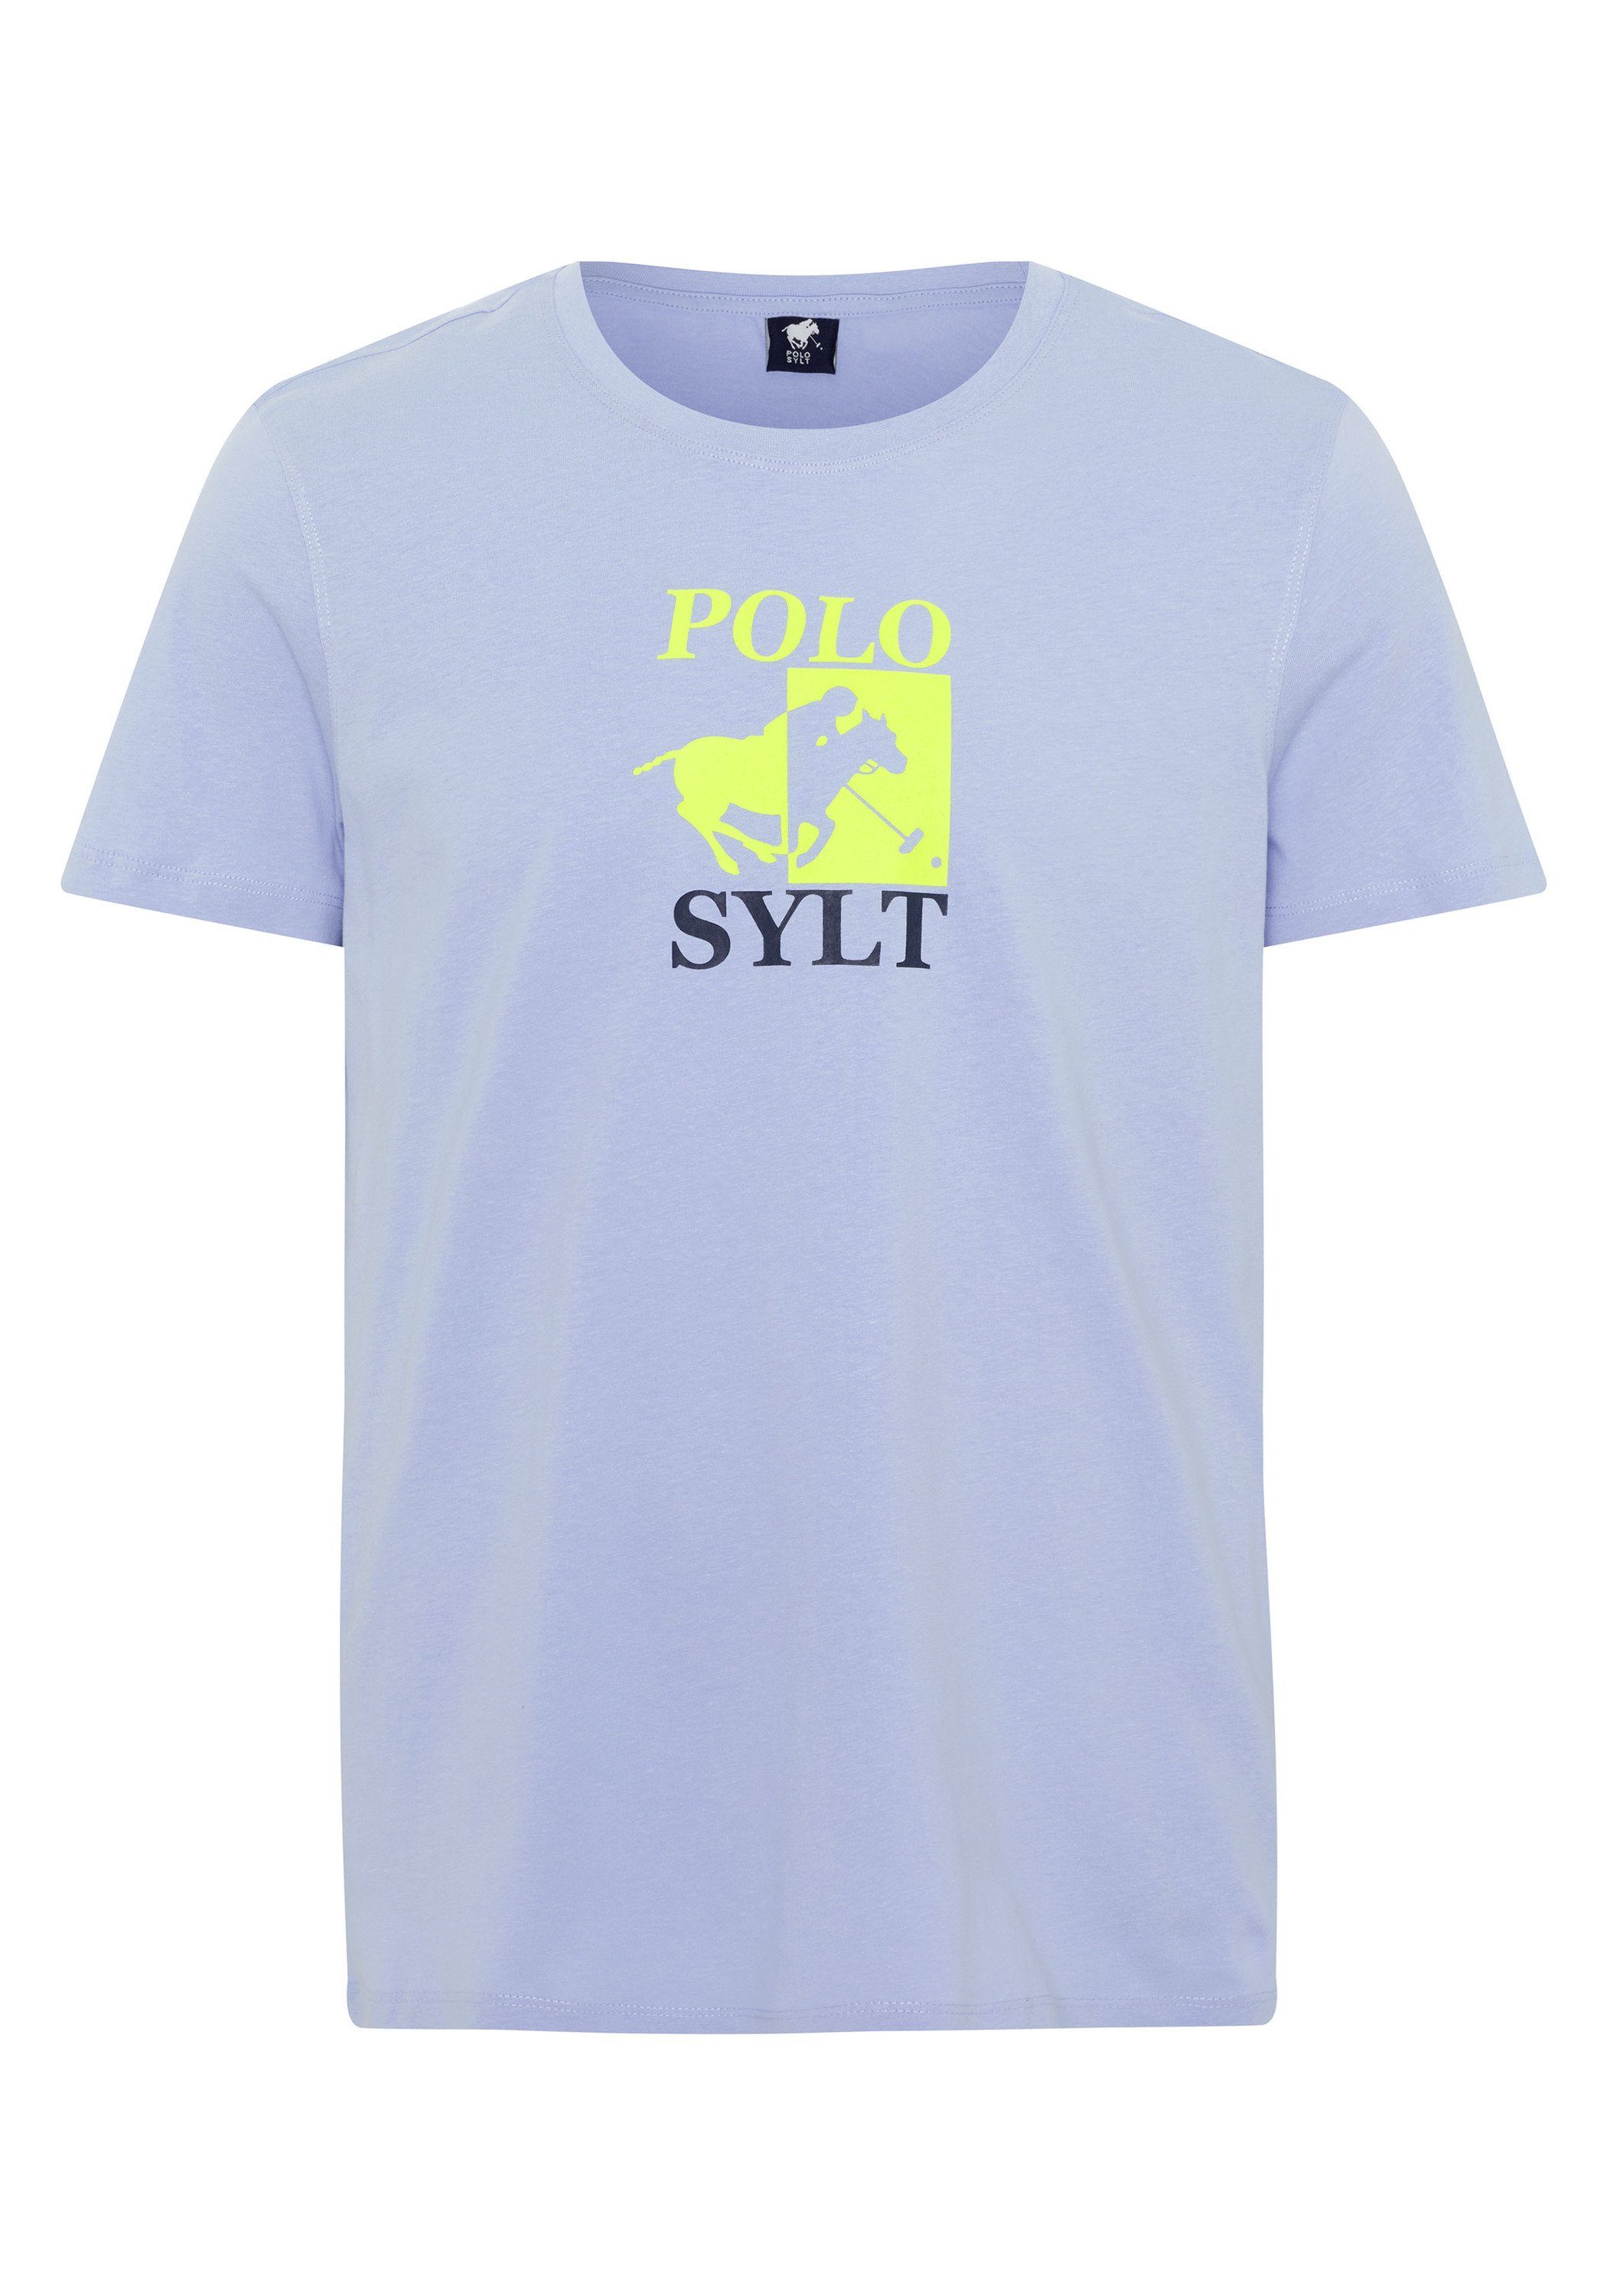 Polo Sylt Print-Shirt mit großem Logoprint 16-3922 Brunnera Blue